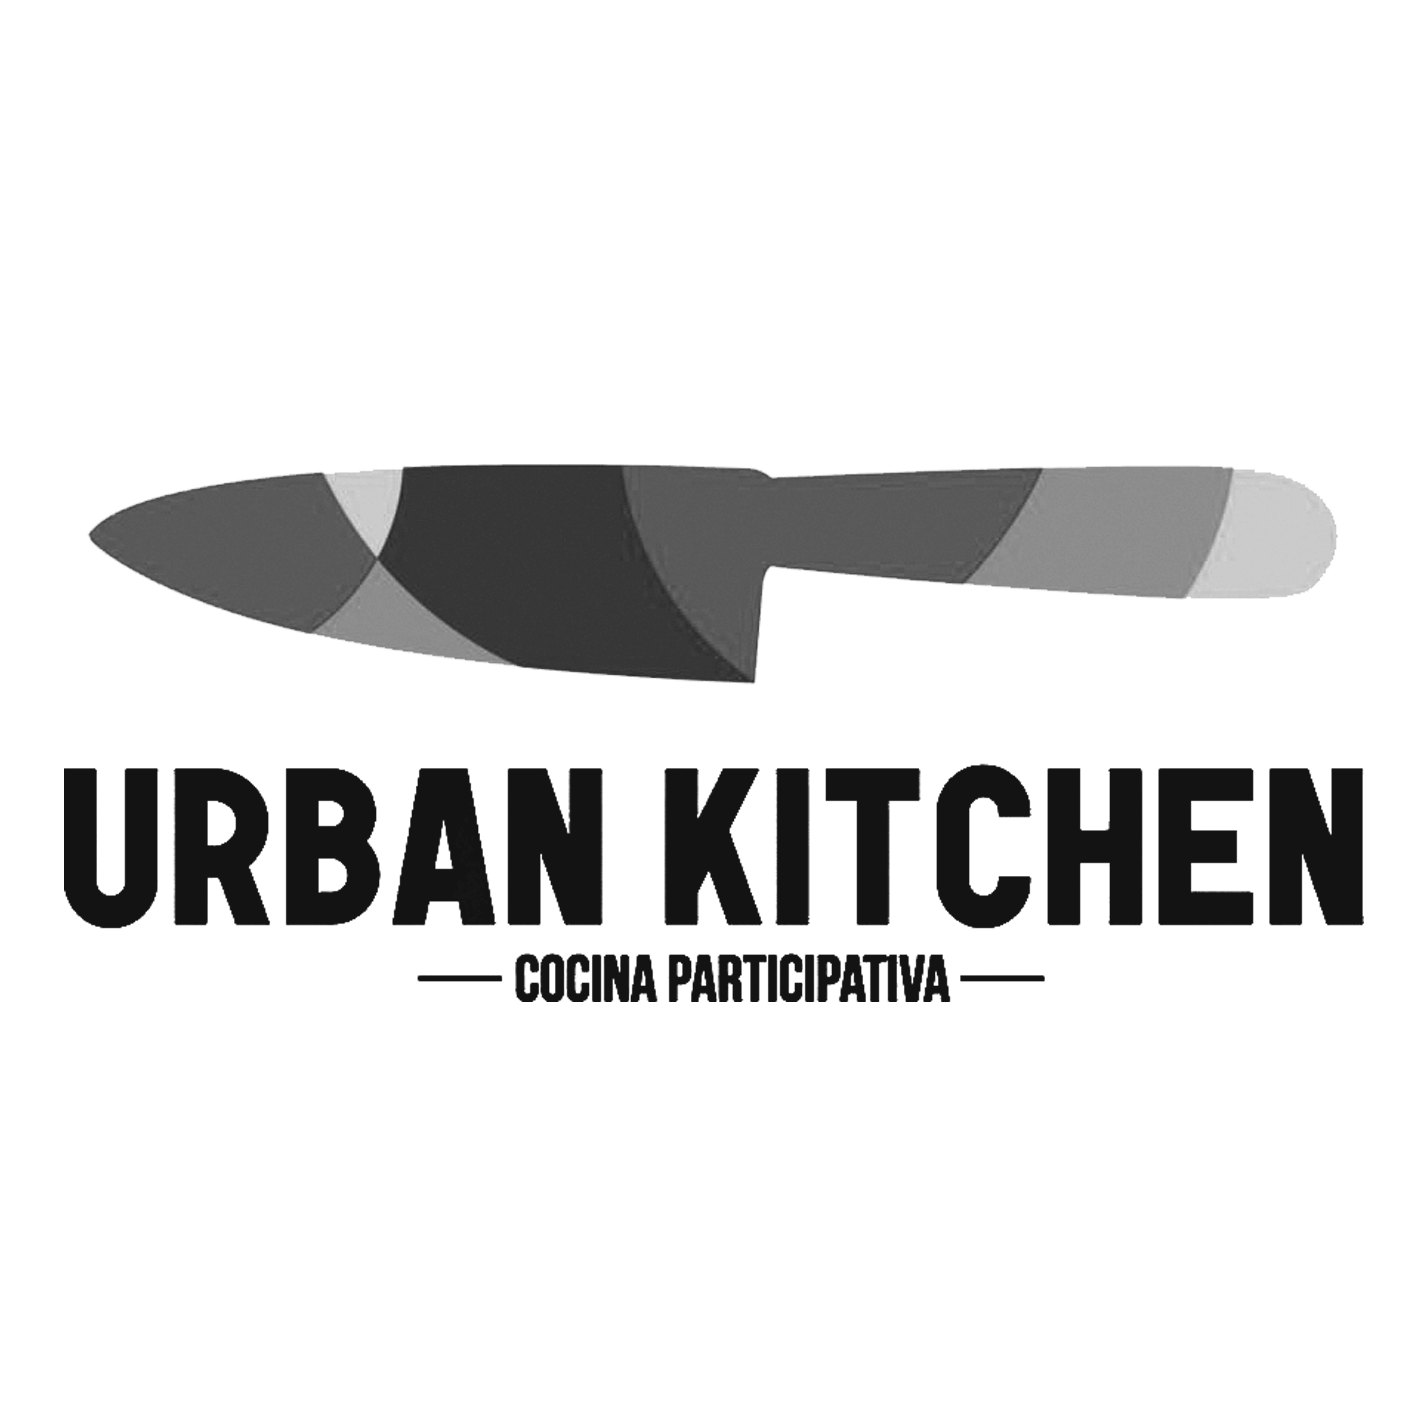 Imagen de Urban kitchen